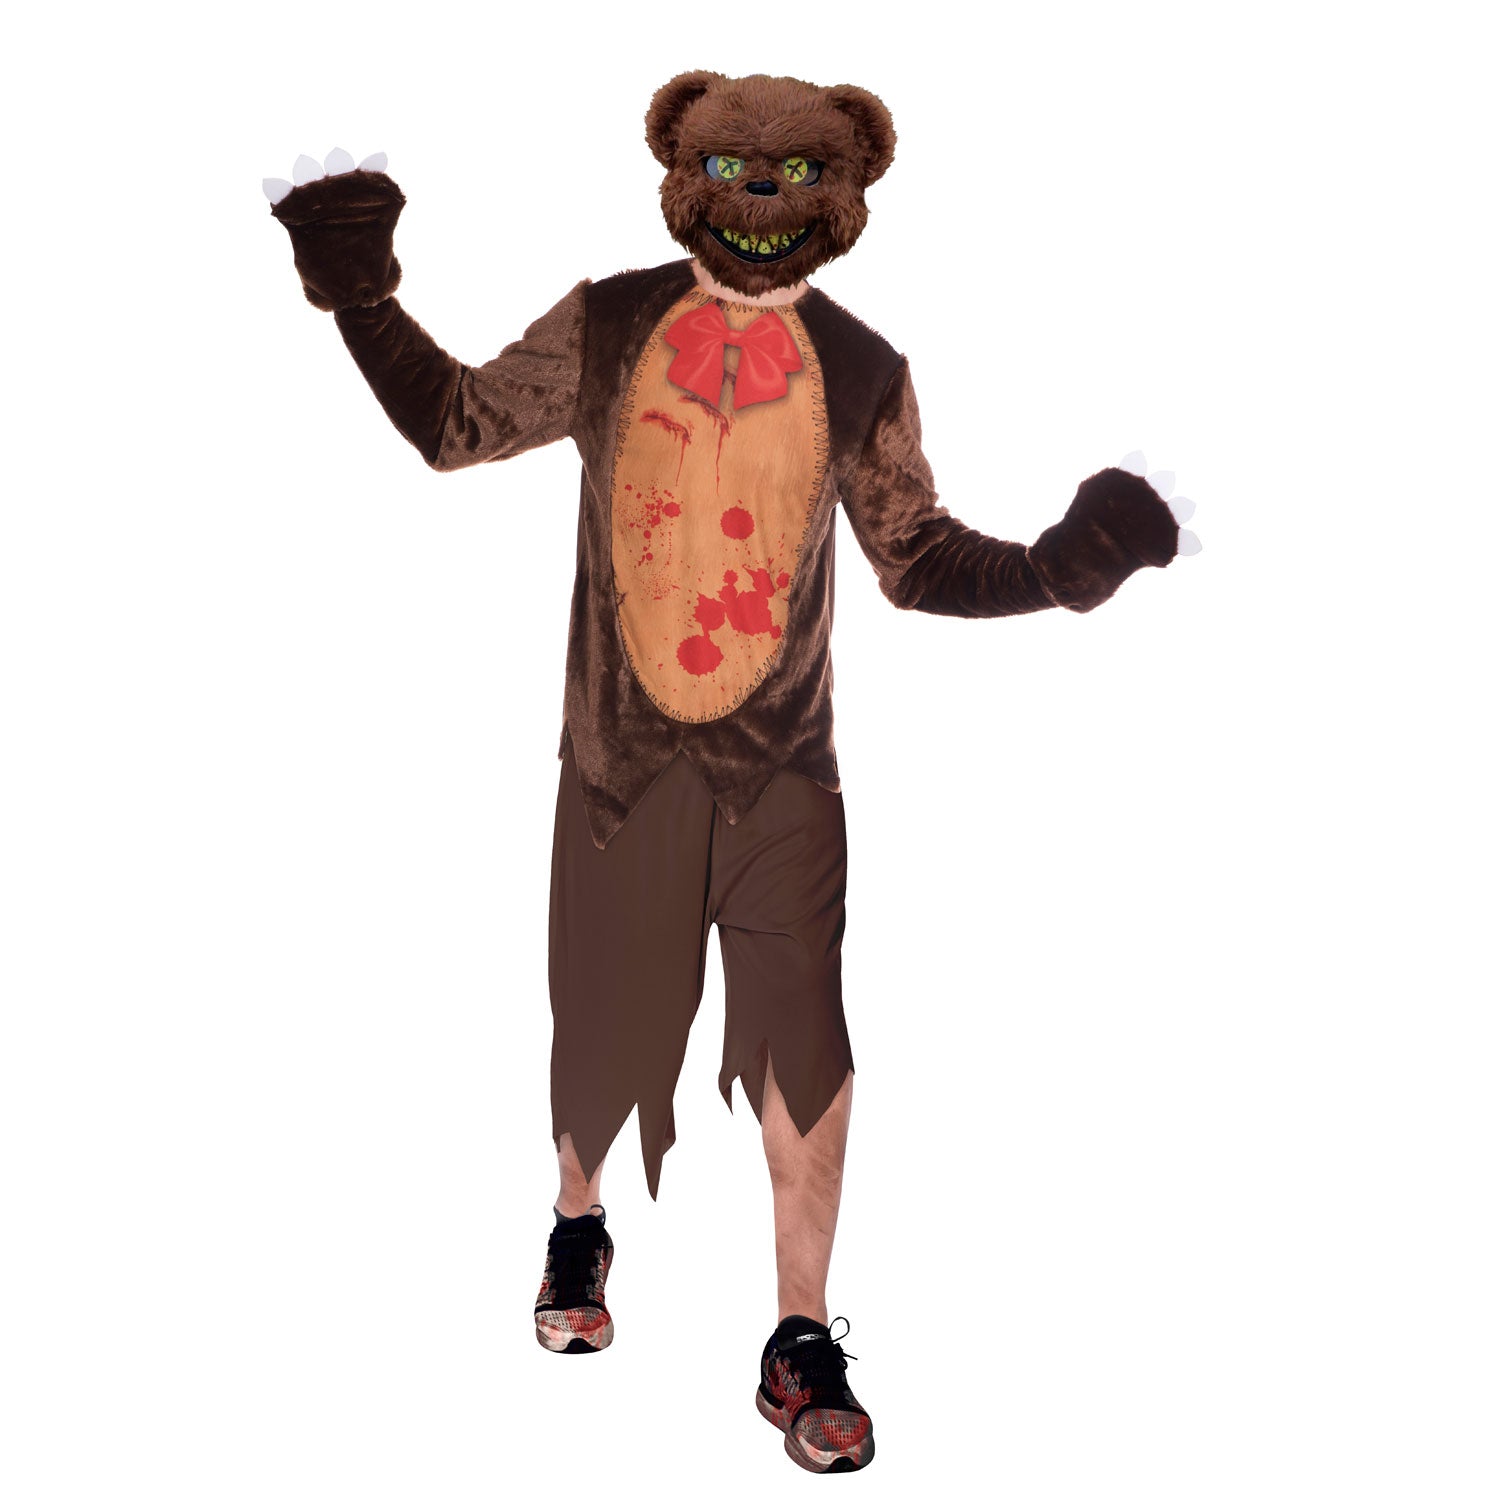 Teddy Terror Bear